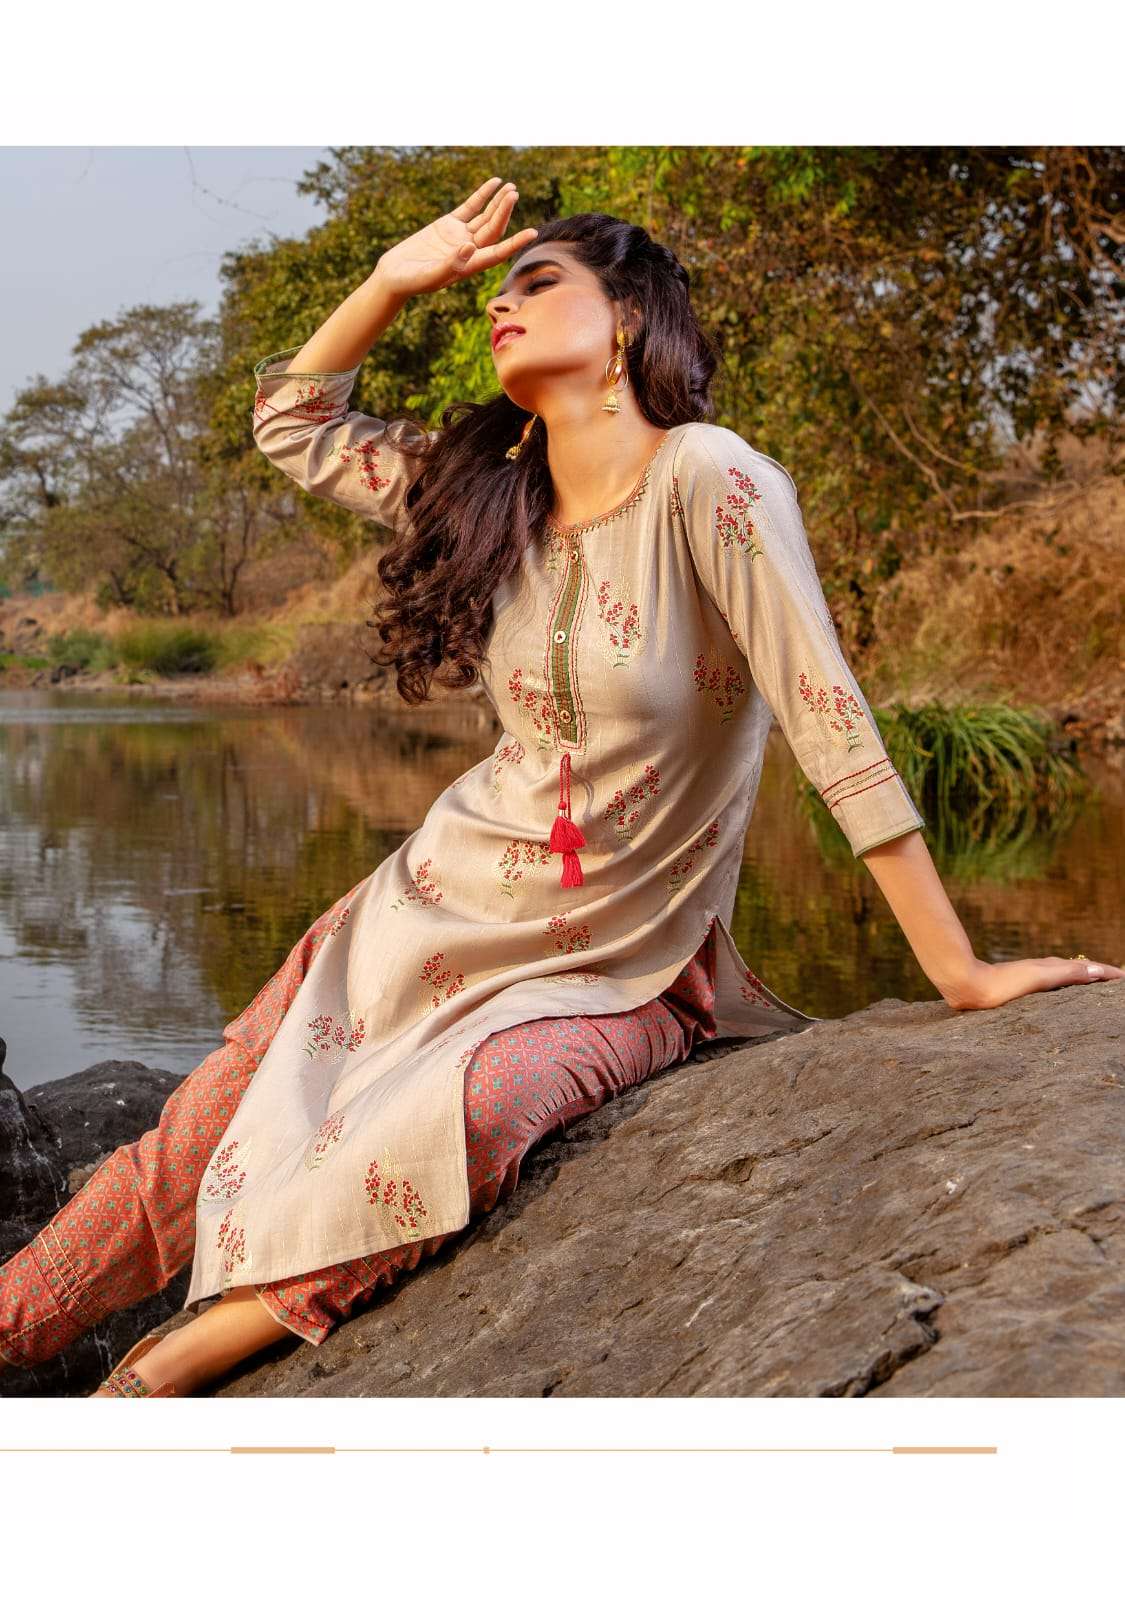 mayree india breezy rayon stylish kurtis catalogue wholesale price surat